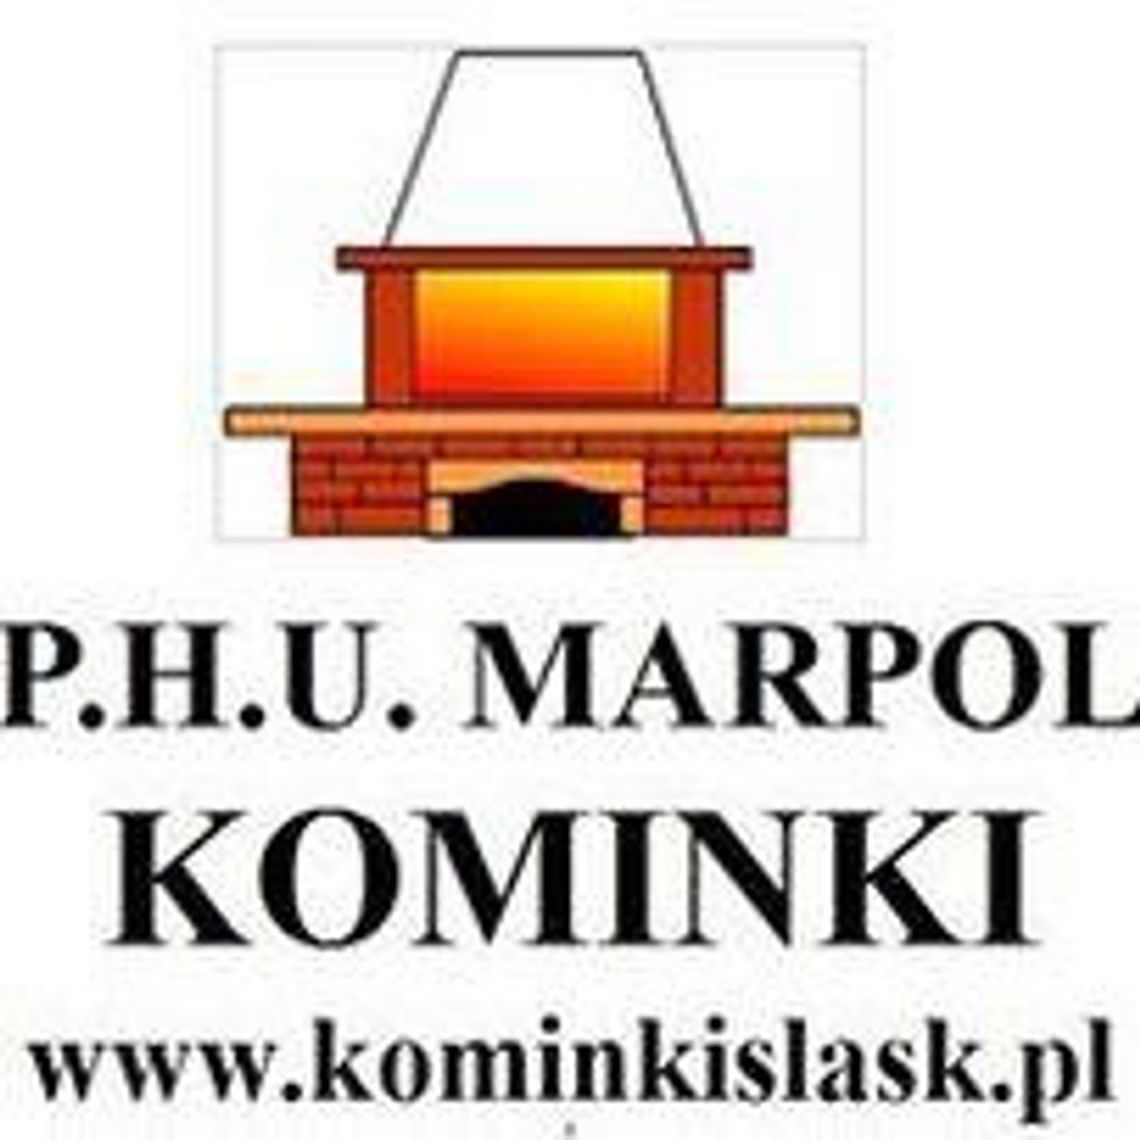 P.H.U. MARPOL KOMINKI